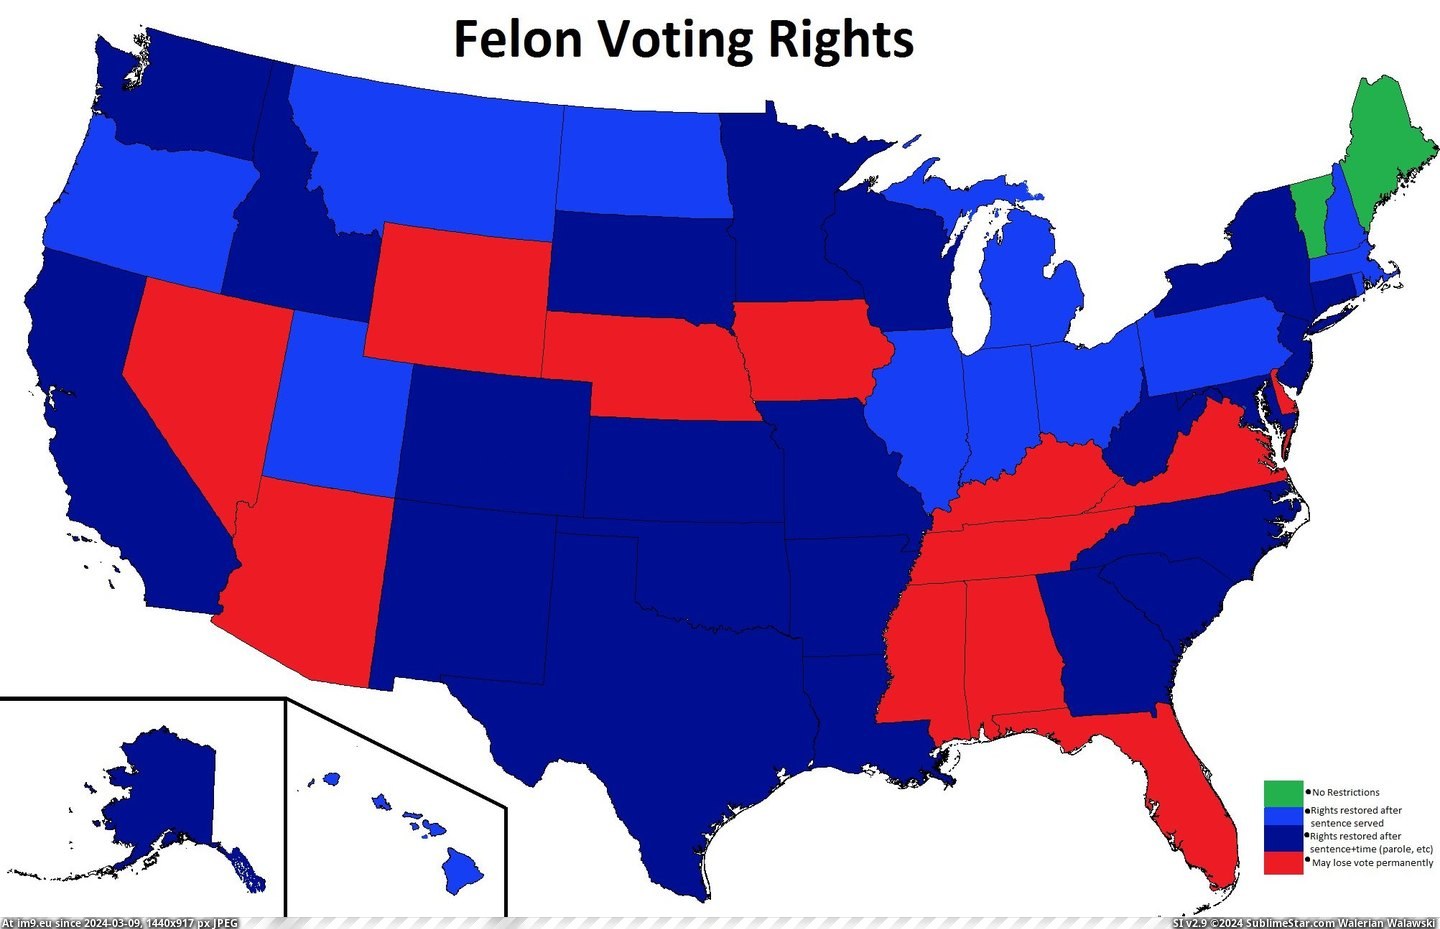 #Usa #Voting #Felon #Rights #2005x1289 [Mapporn] Felon Voting Rights in the USA [2005x1289] [OC] Pic. (Bild von album My r/MAPS favs))